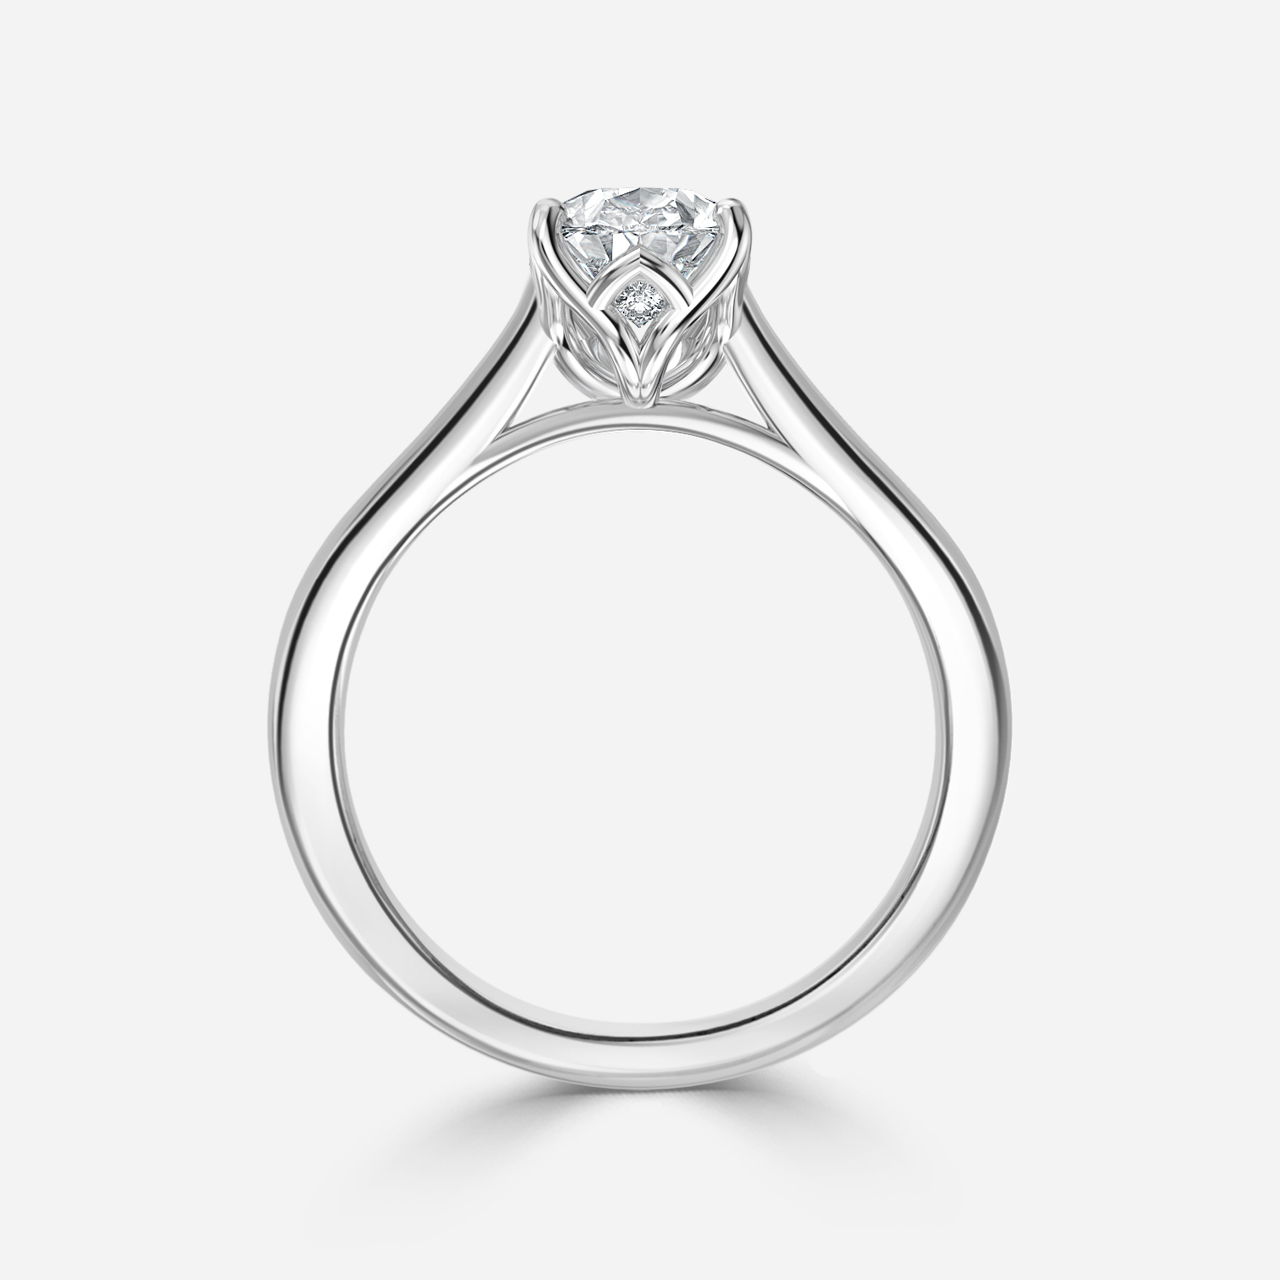 Aerin White Gold Engagement Ring